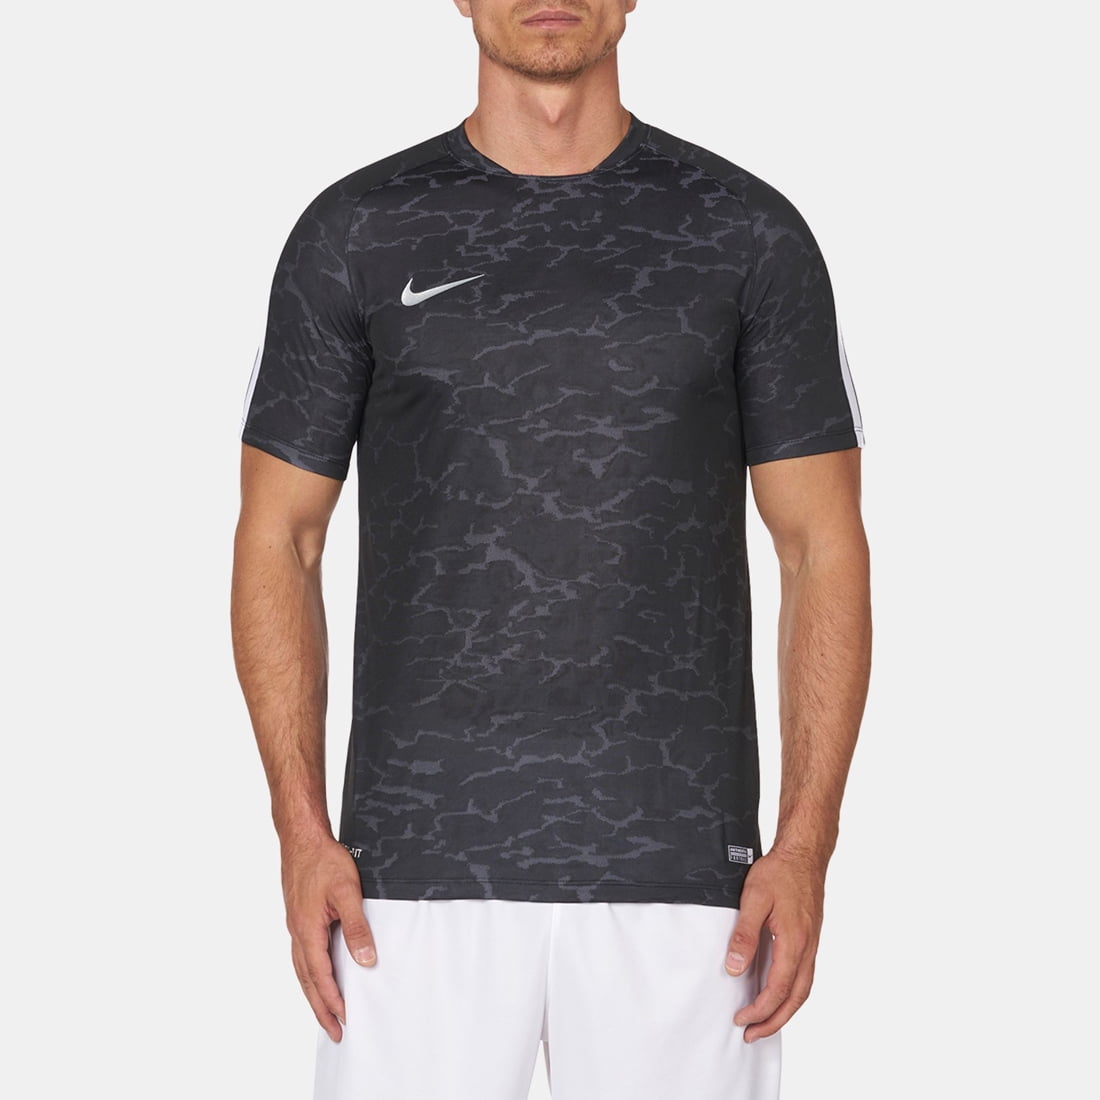 Nike - Nike Men's Training Shirt Flash Cr7, Black/White, Medium ...